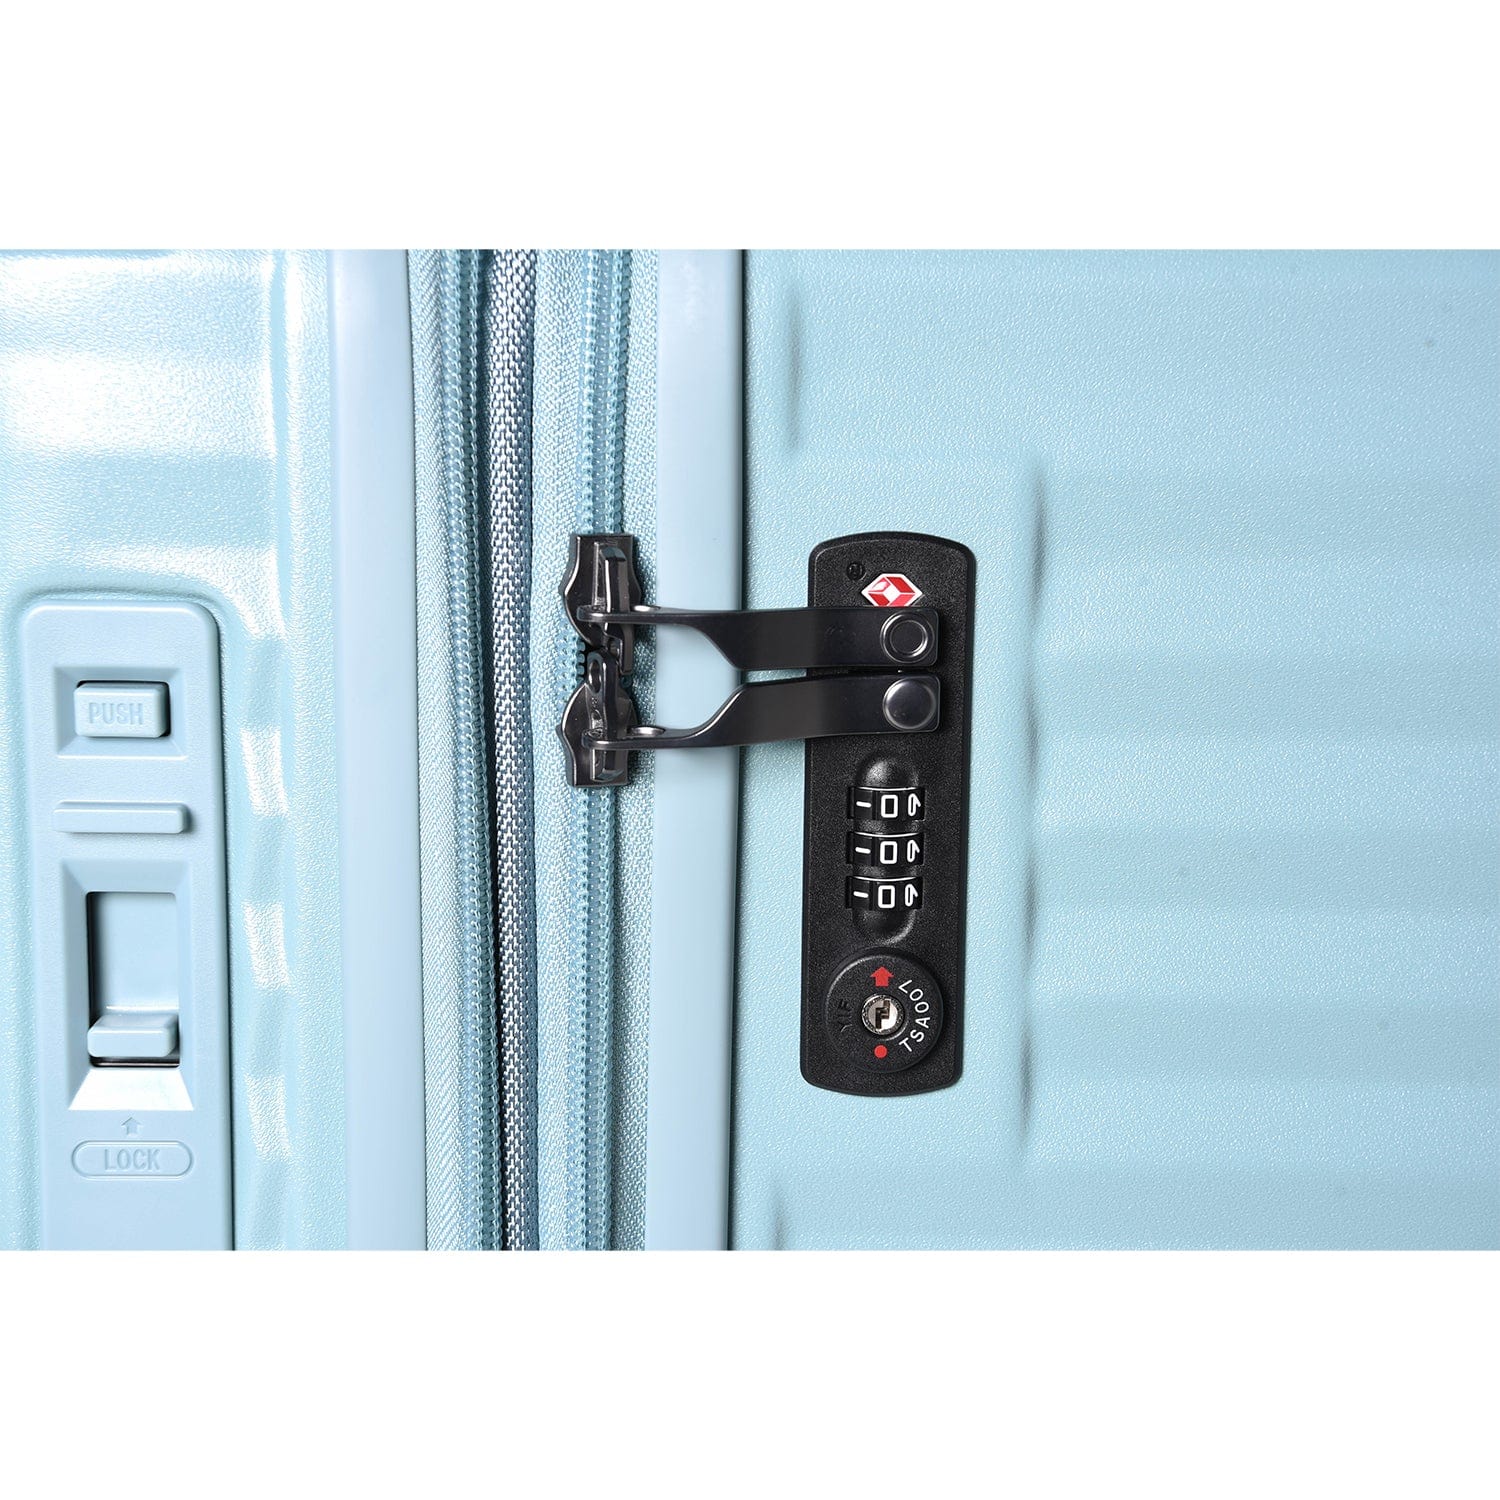 Echolac Celestra 76.5cm Hardcase Expandable 4 Double Wheel Check-In Luggage Trolley Slate Blue - PC183XA